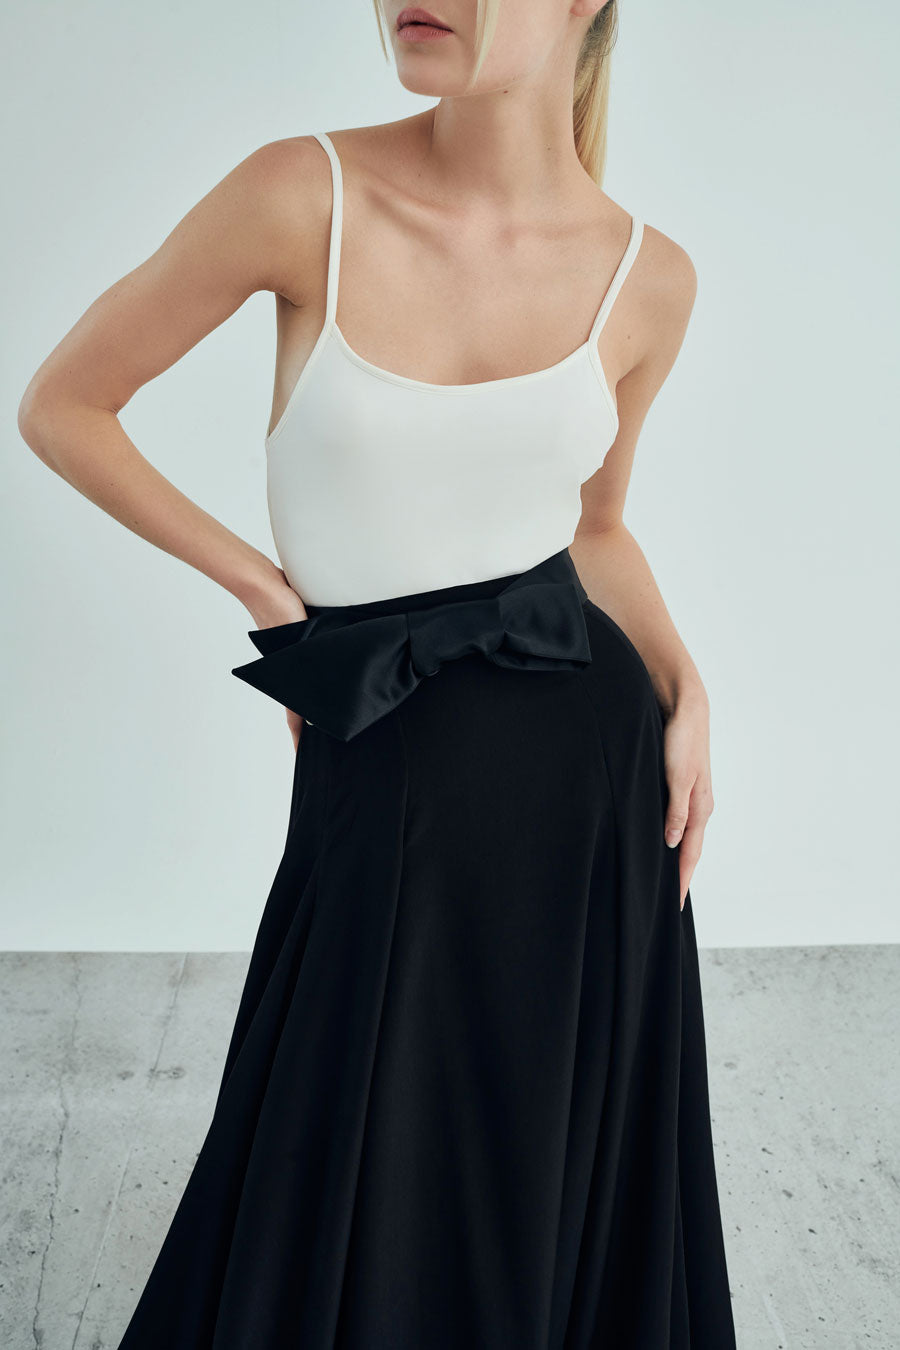 Claire - Non Iron - Black voluminous long skirt